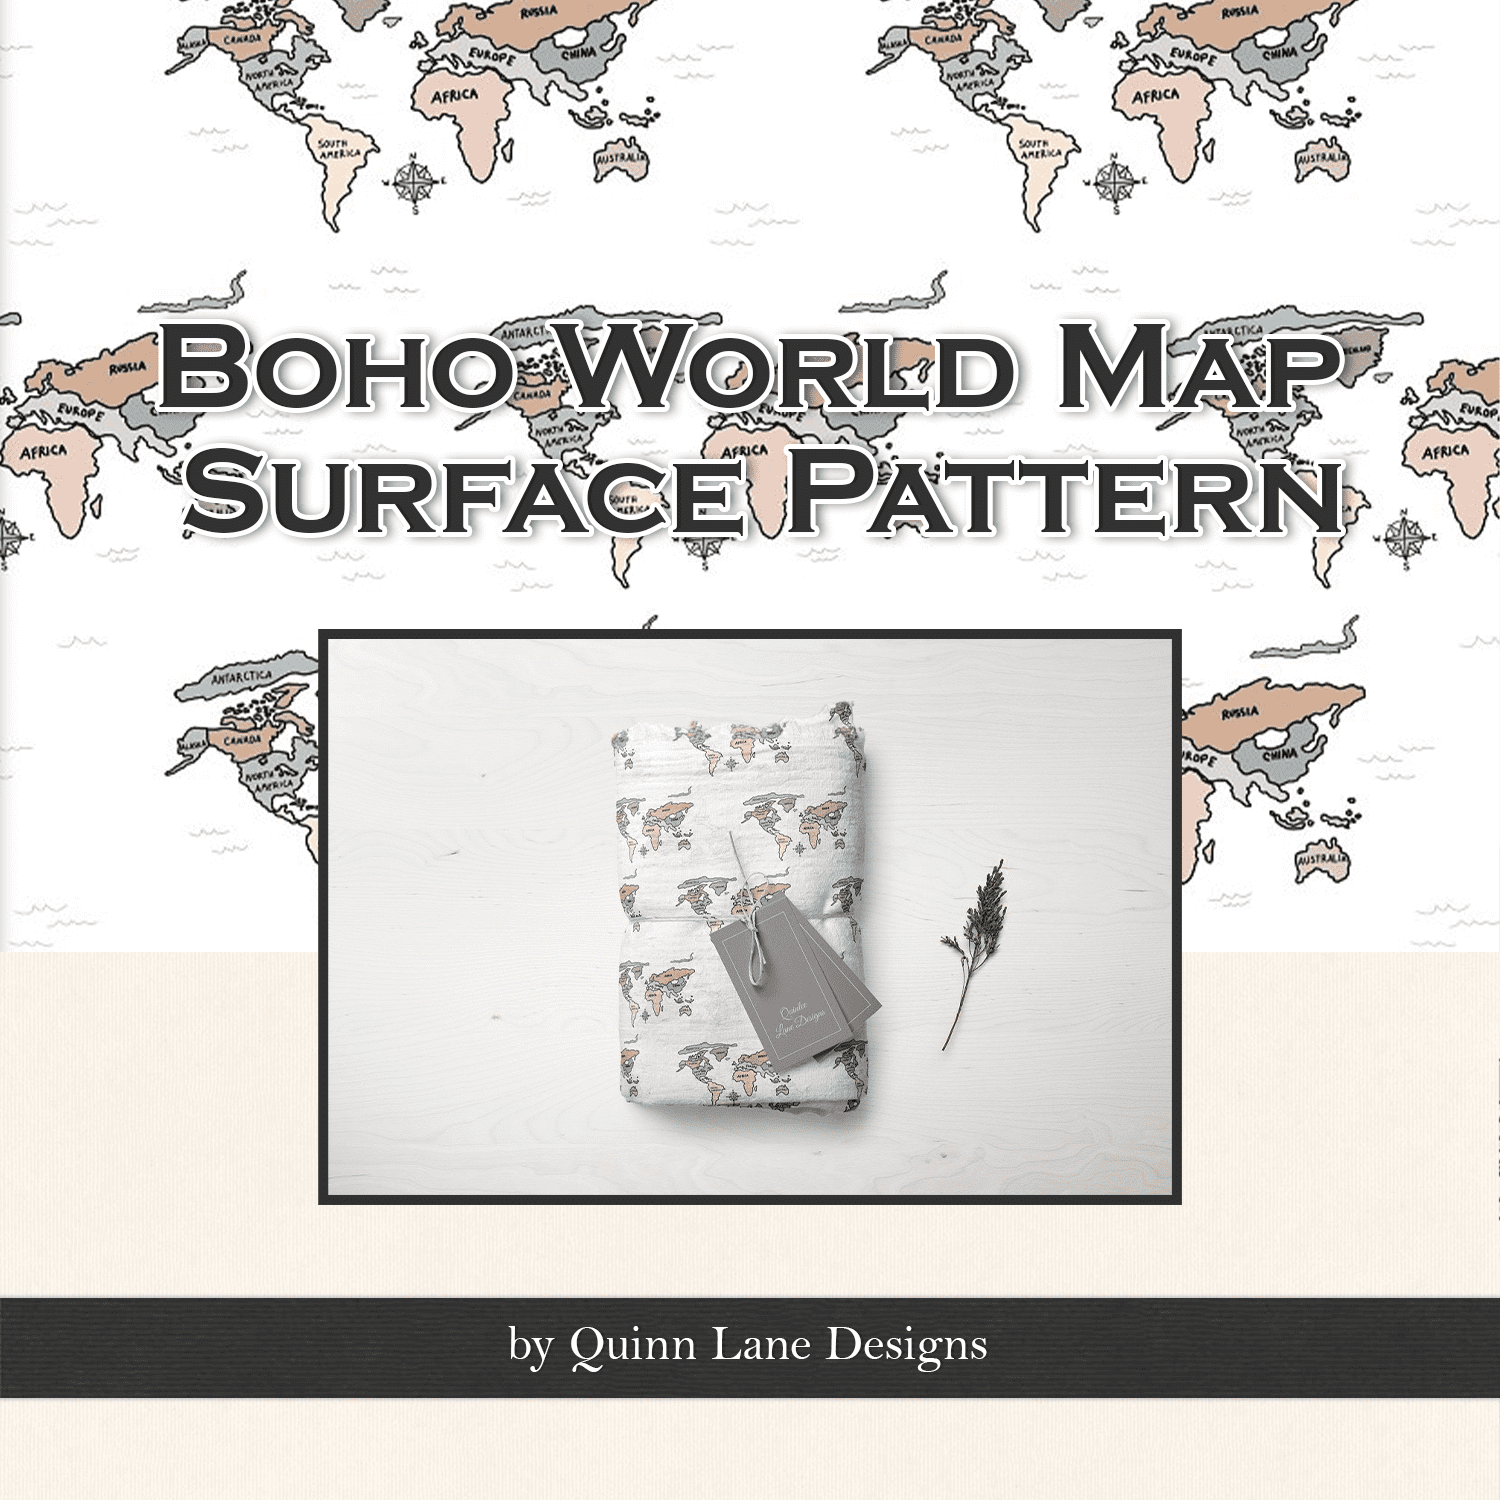 Boho World Map Surface Pattern cover.